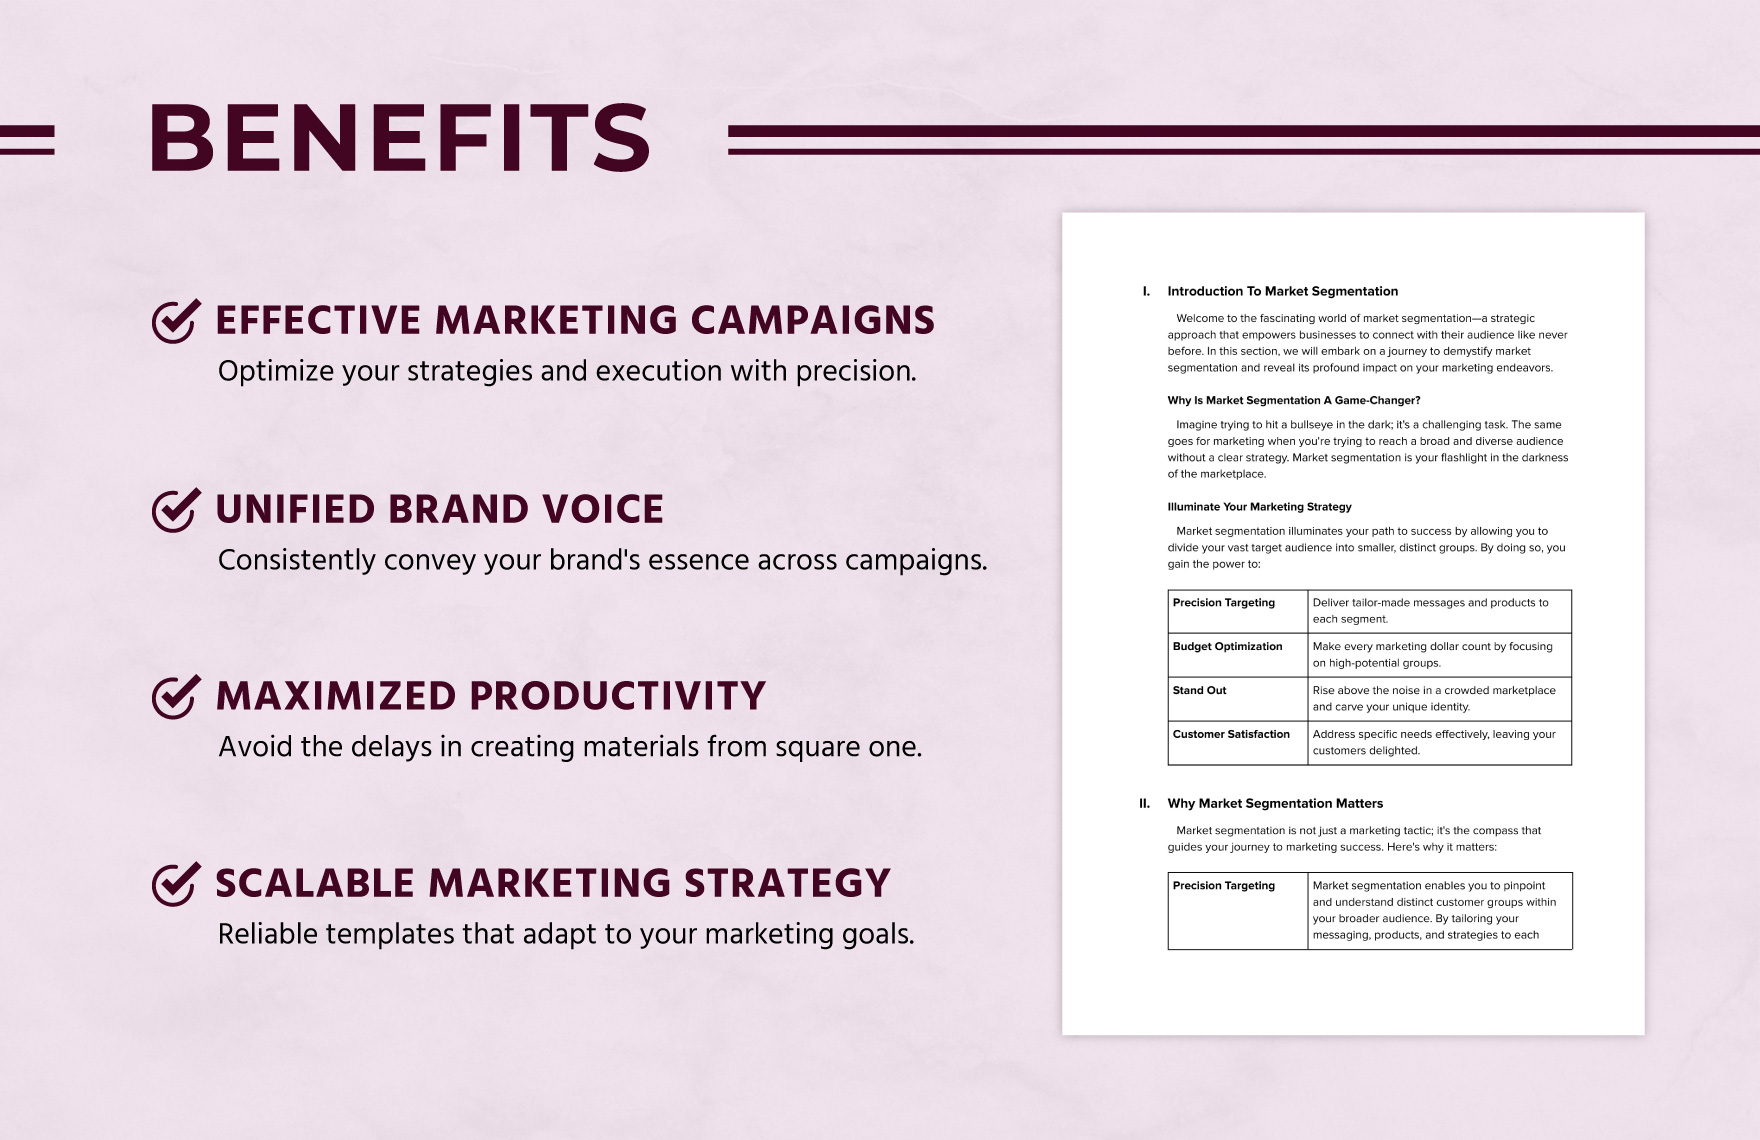 Marketing Market Segmentation Pamphlet Template